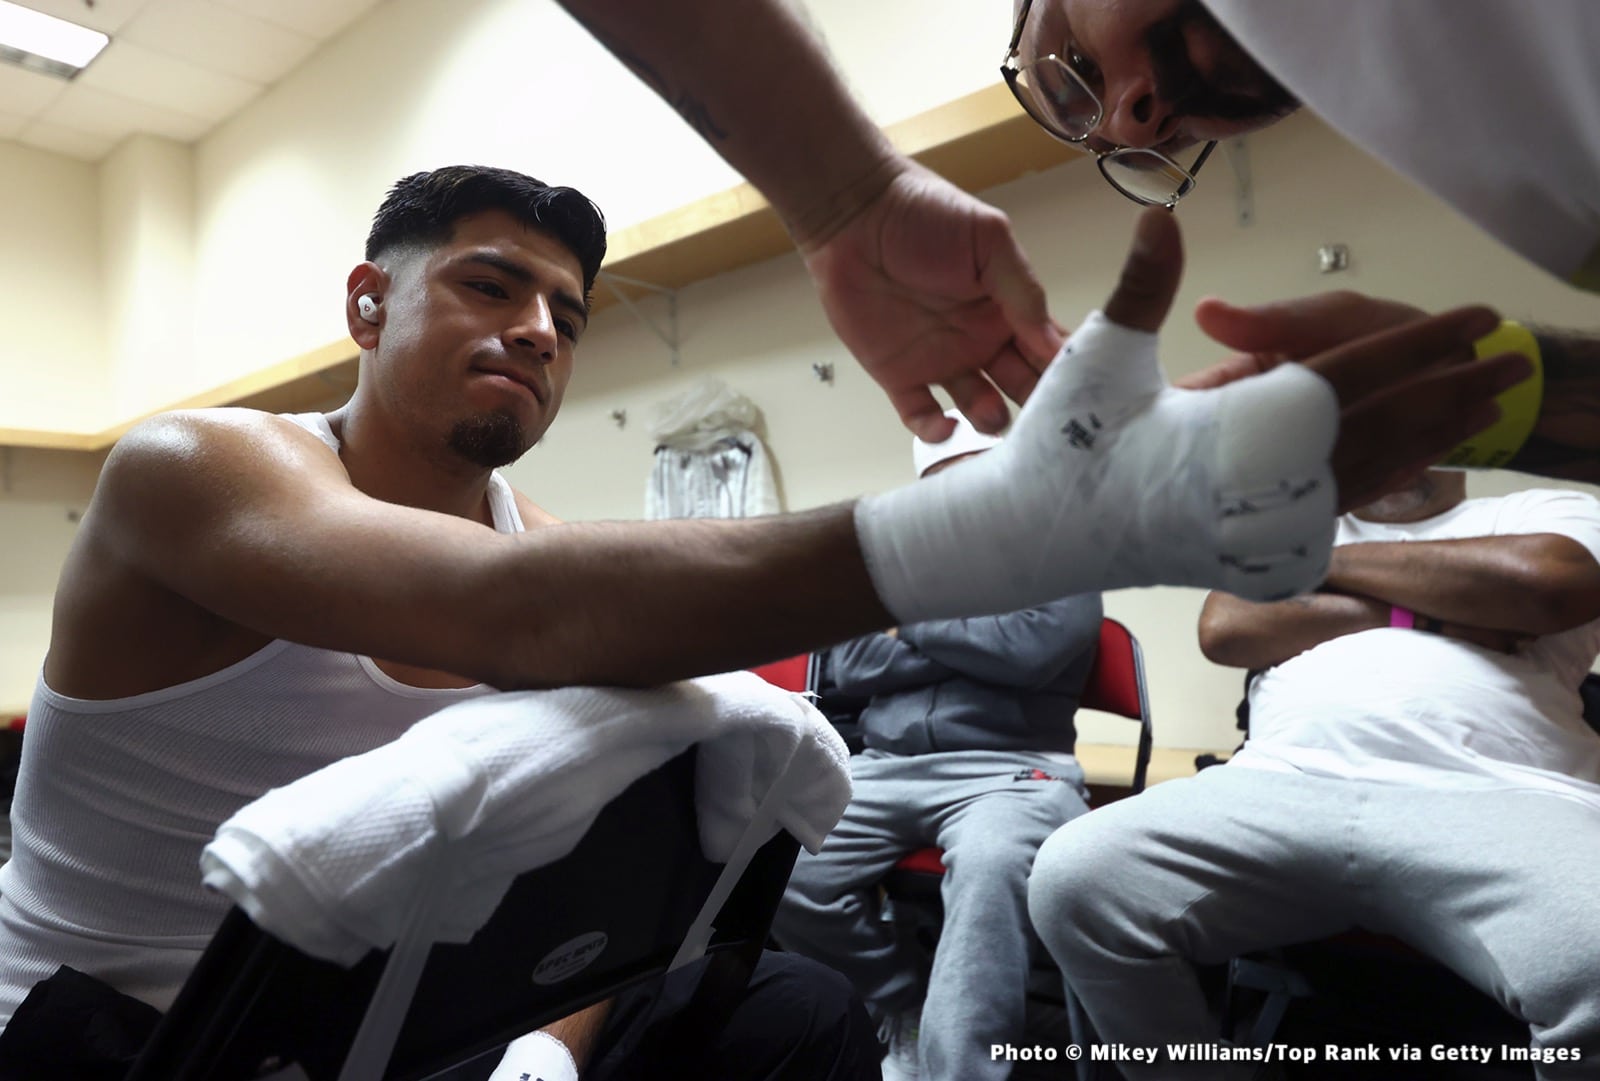 Image: Boxing Results: Jose Ramirez Defeats Jose “Sniper” Pedraza in Fresno!